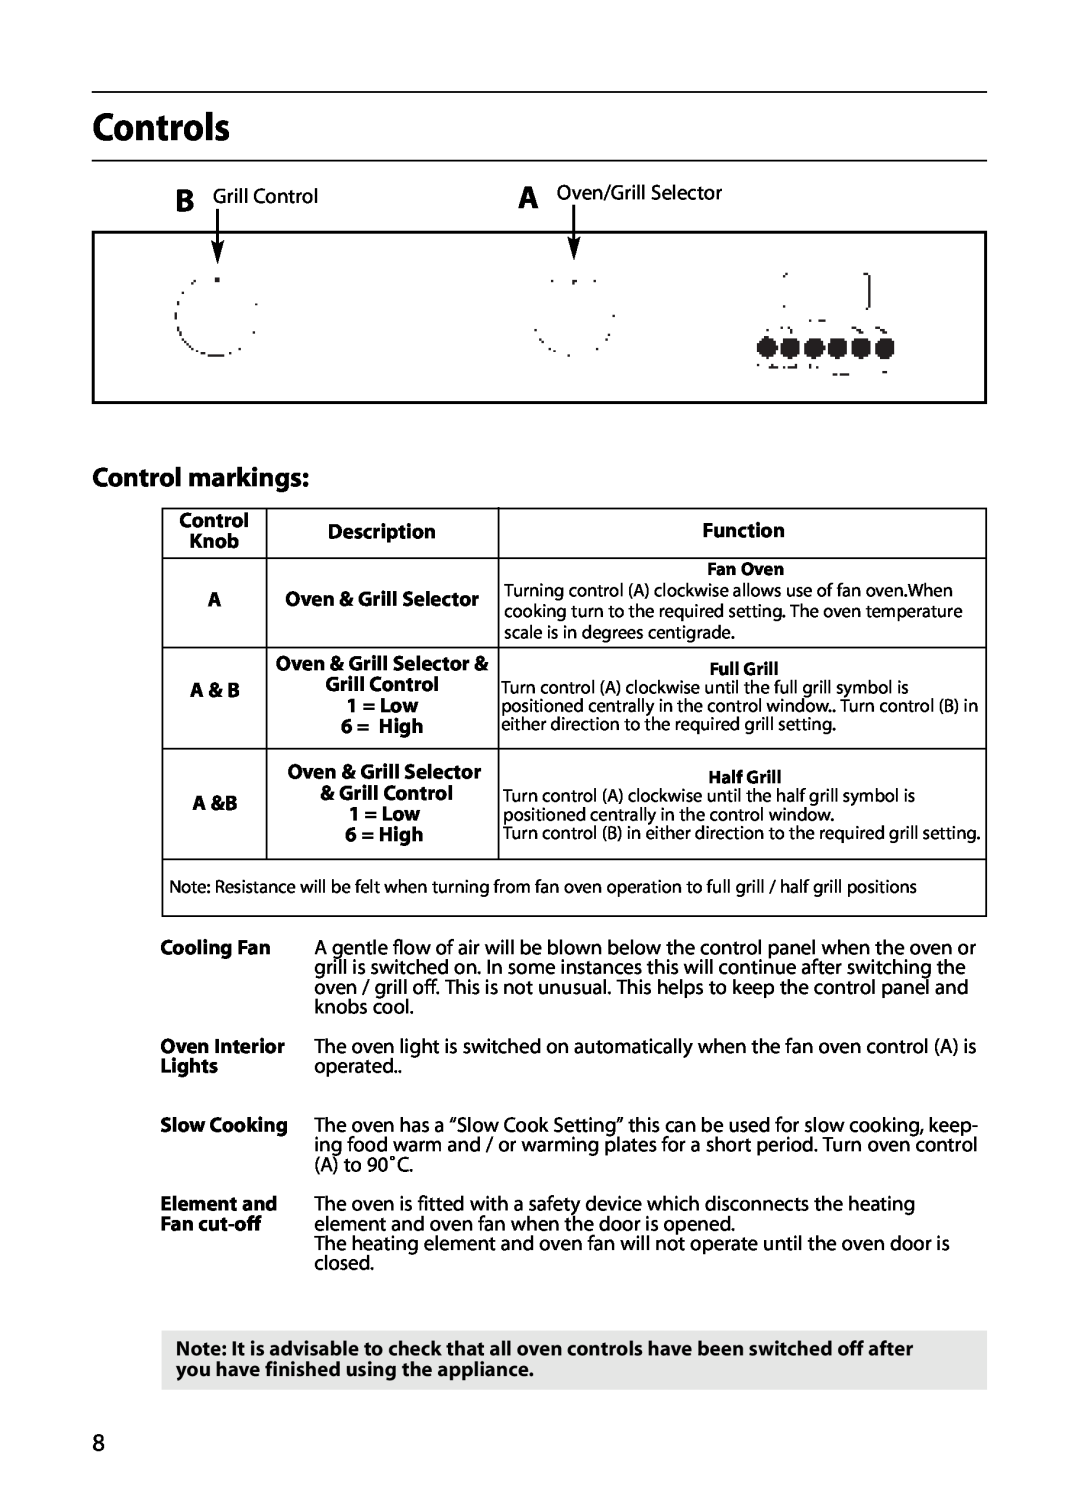 Creda CB01E manual Controls, Control markings, Description, Function, 6 = High, Grill Control 